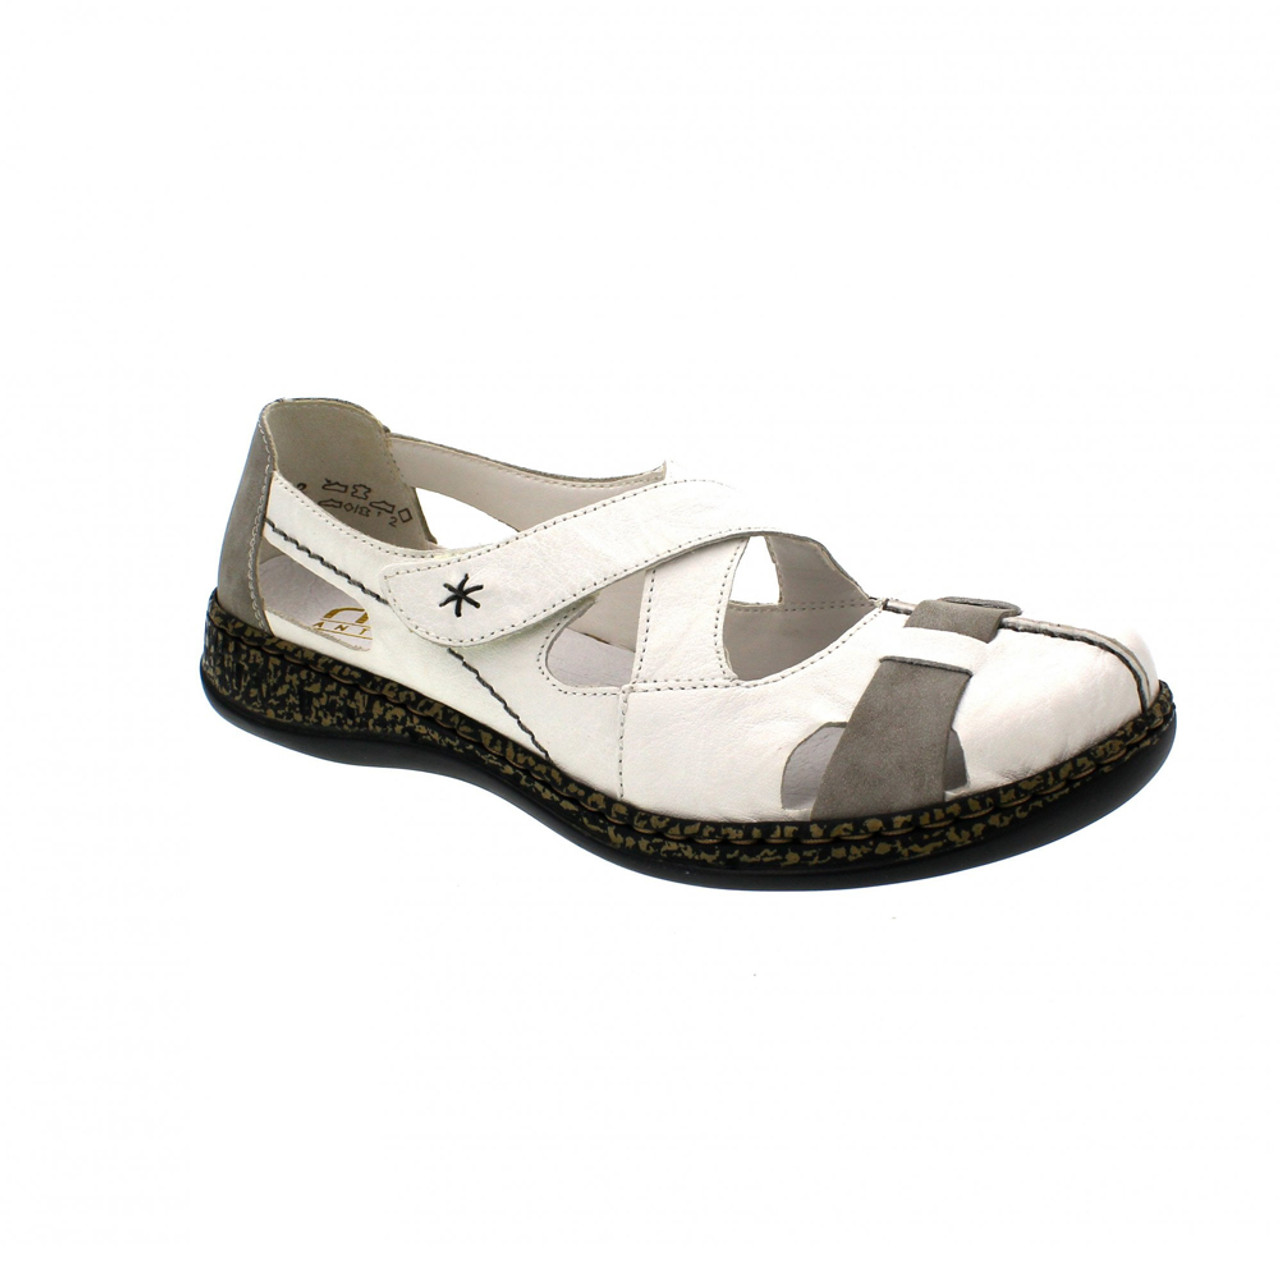 Rieker Women's Daisy 67 Mary - White | Rieker Ladies Shoes & More - Shoolu.com | Shoolu.com